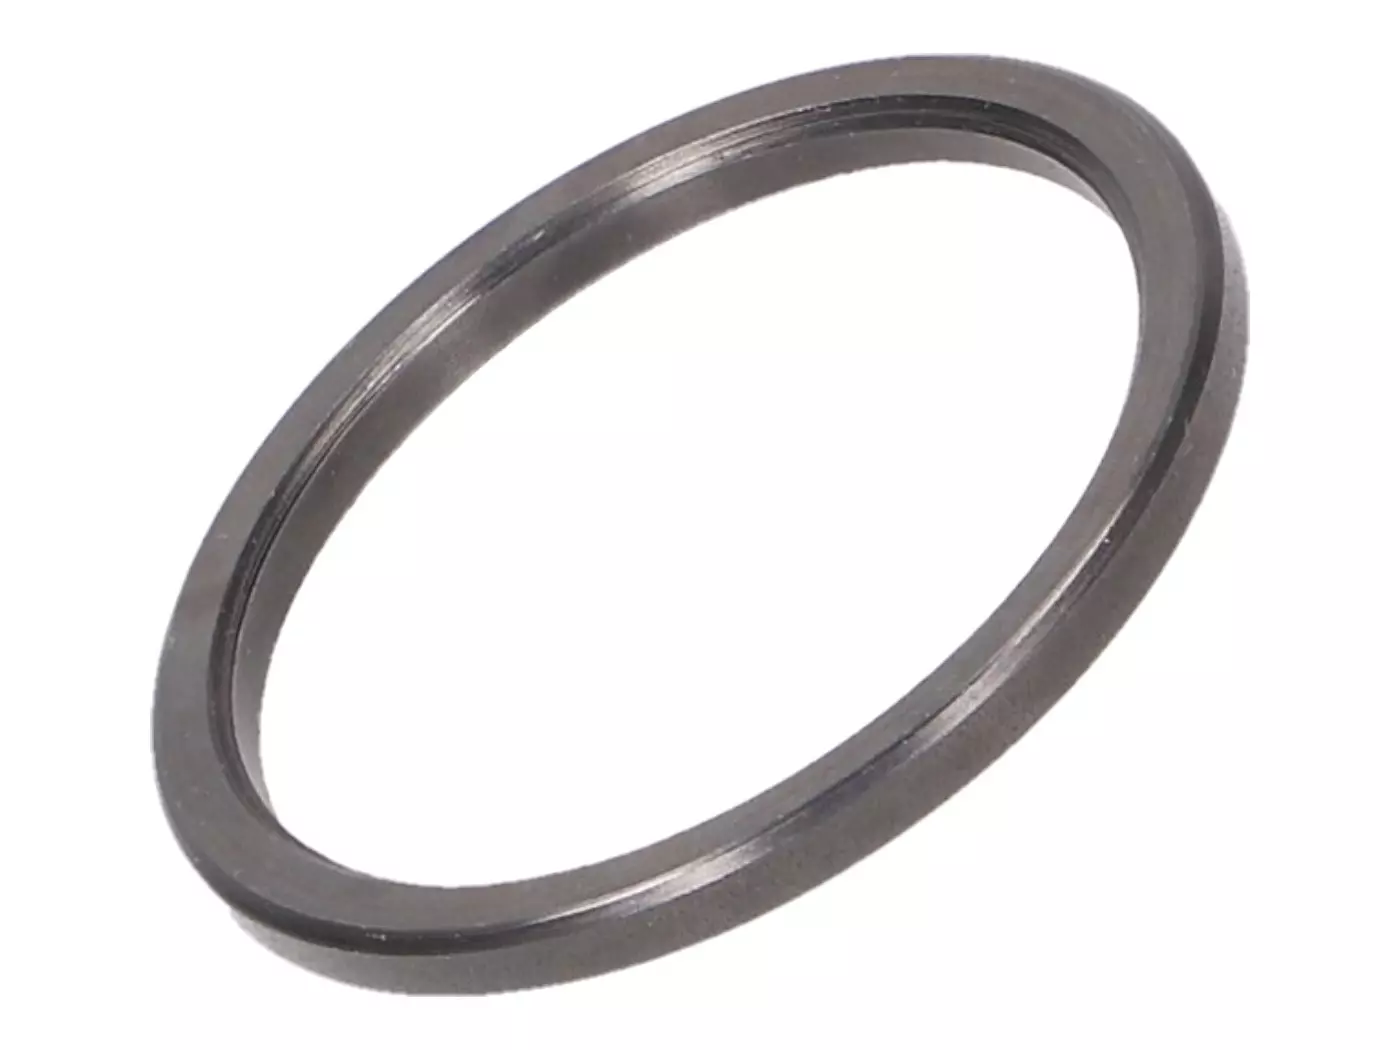 Variator Limiter Ring / Restrictor Ring 2mm For China 2-stroke, CPI, Keeway